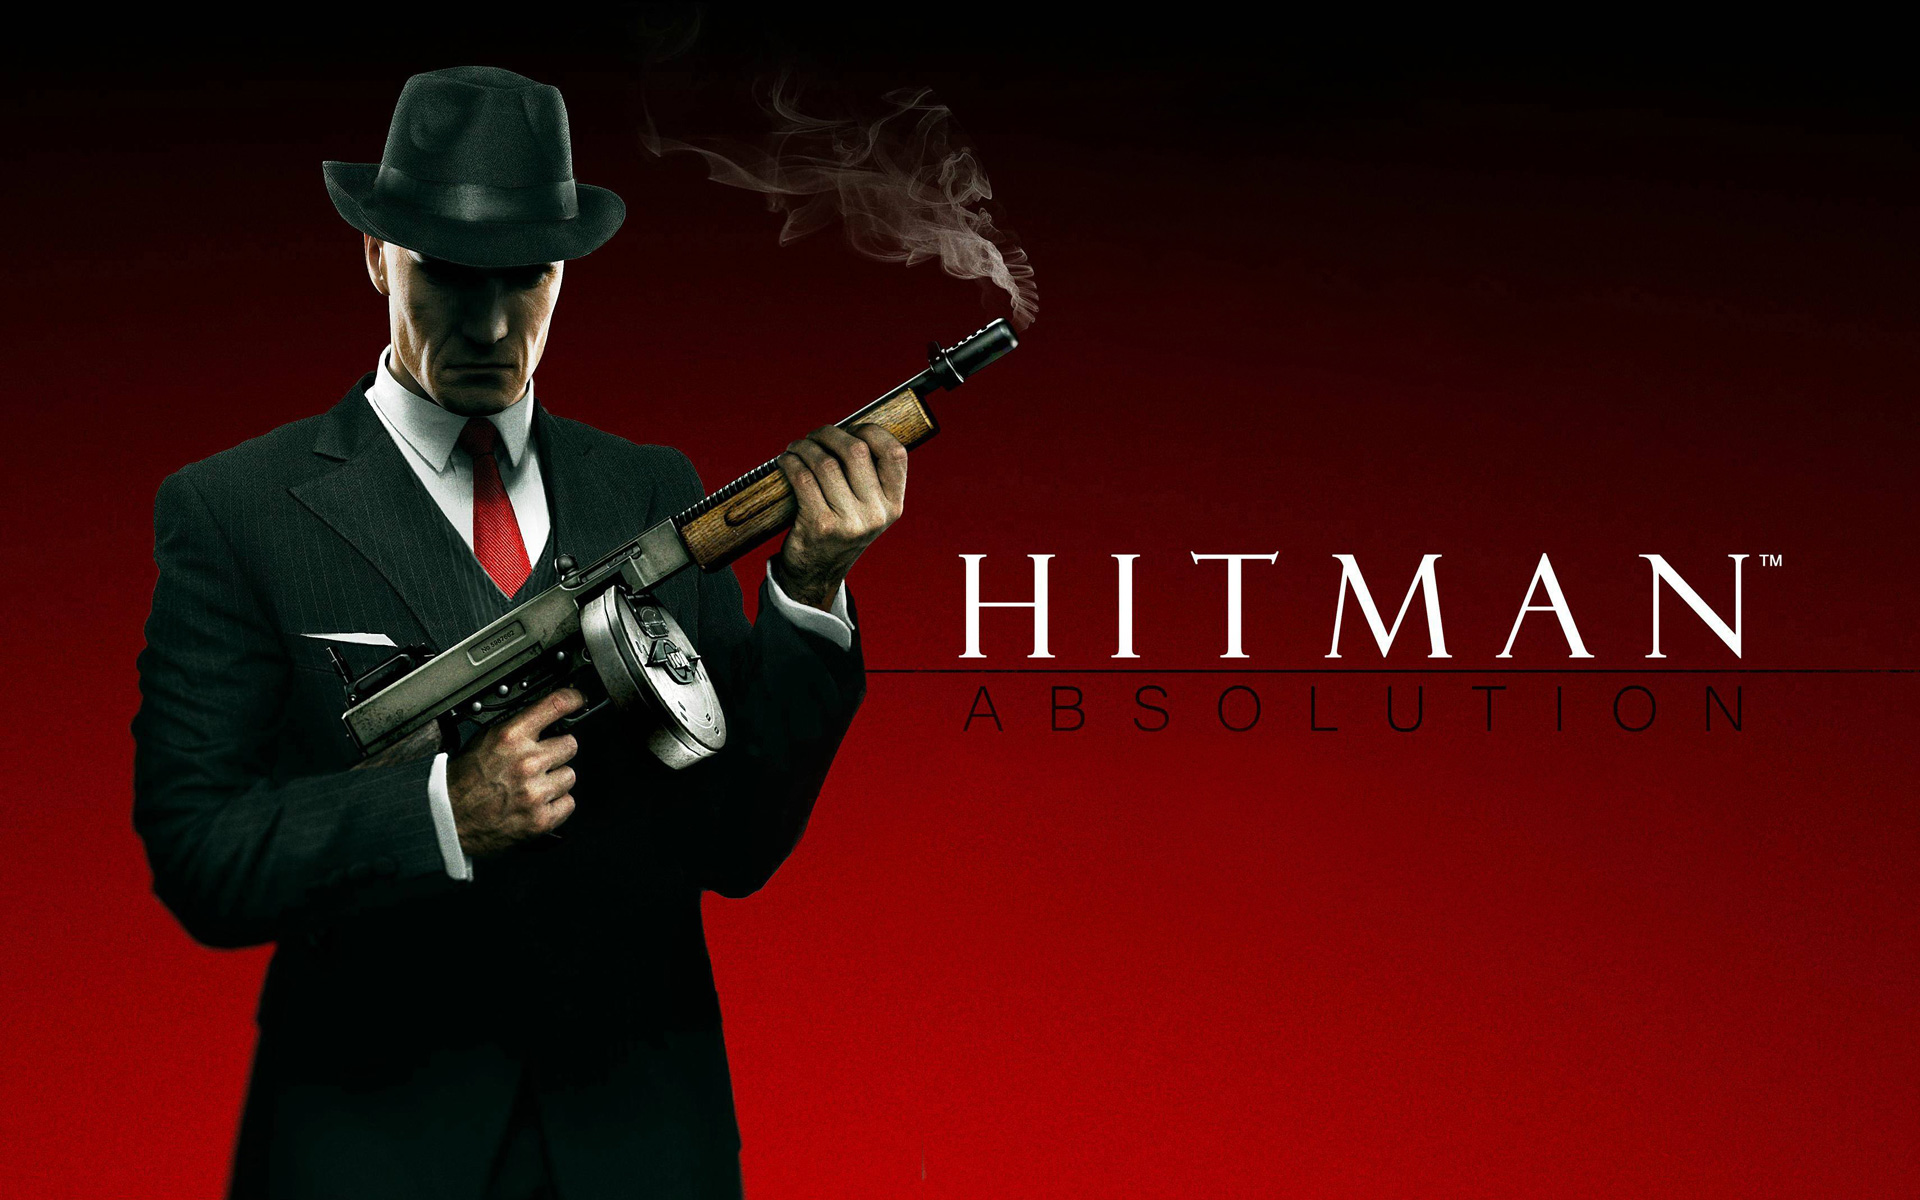 hitman, video game, hitman: absolution